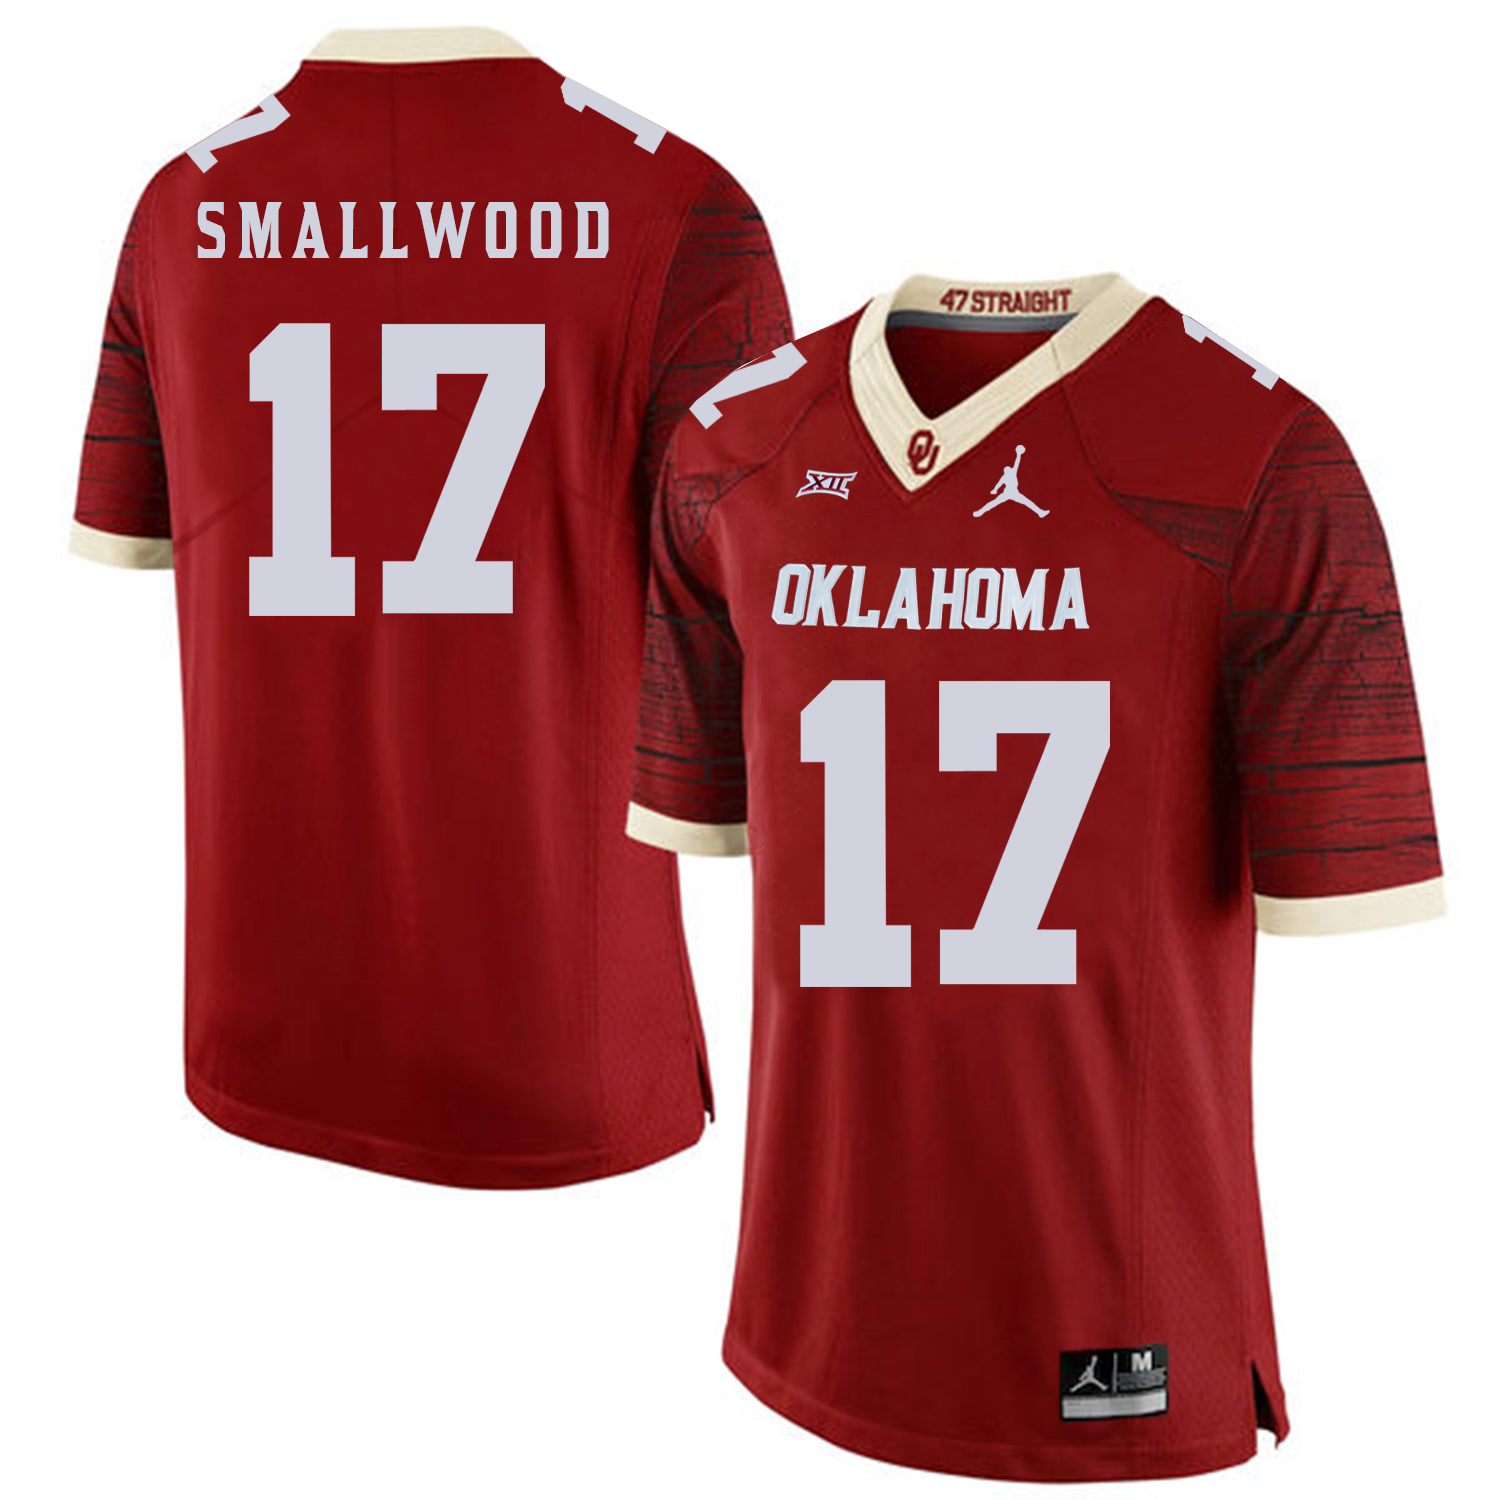 Oklahoma Sooners 17 Jordan Smallwood Red 47 Game Winning Streak College Football Jersey - Click Image to Close